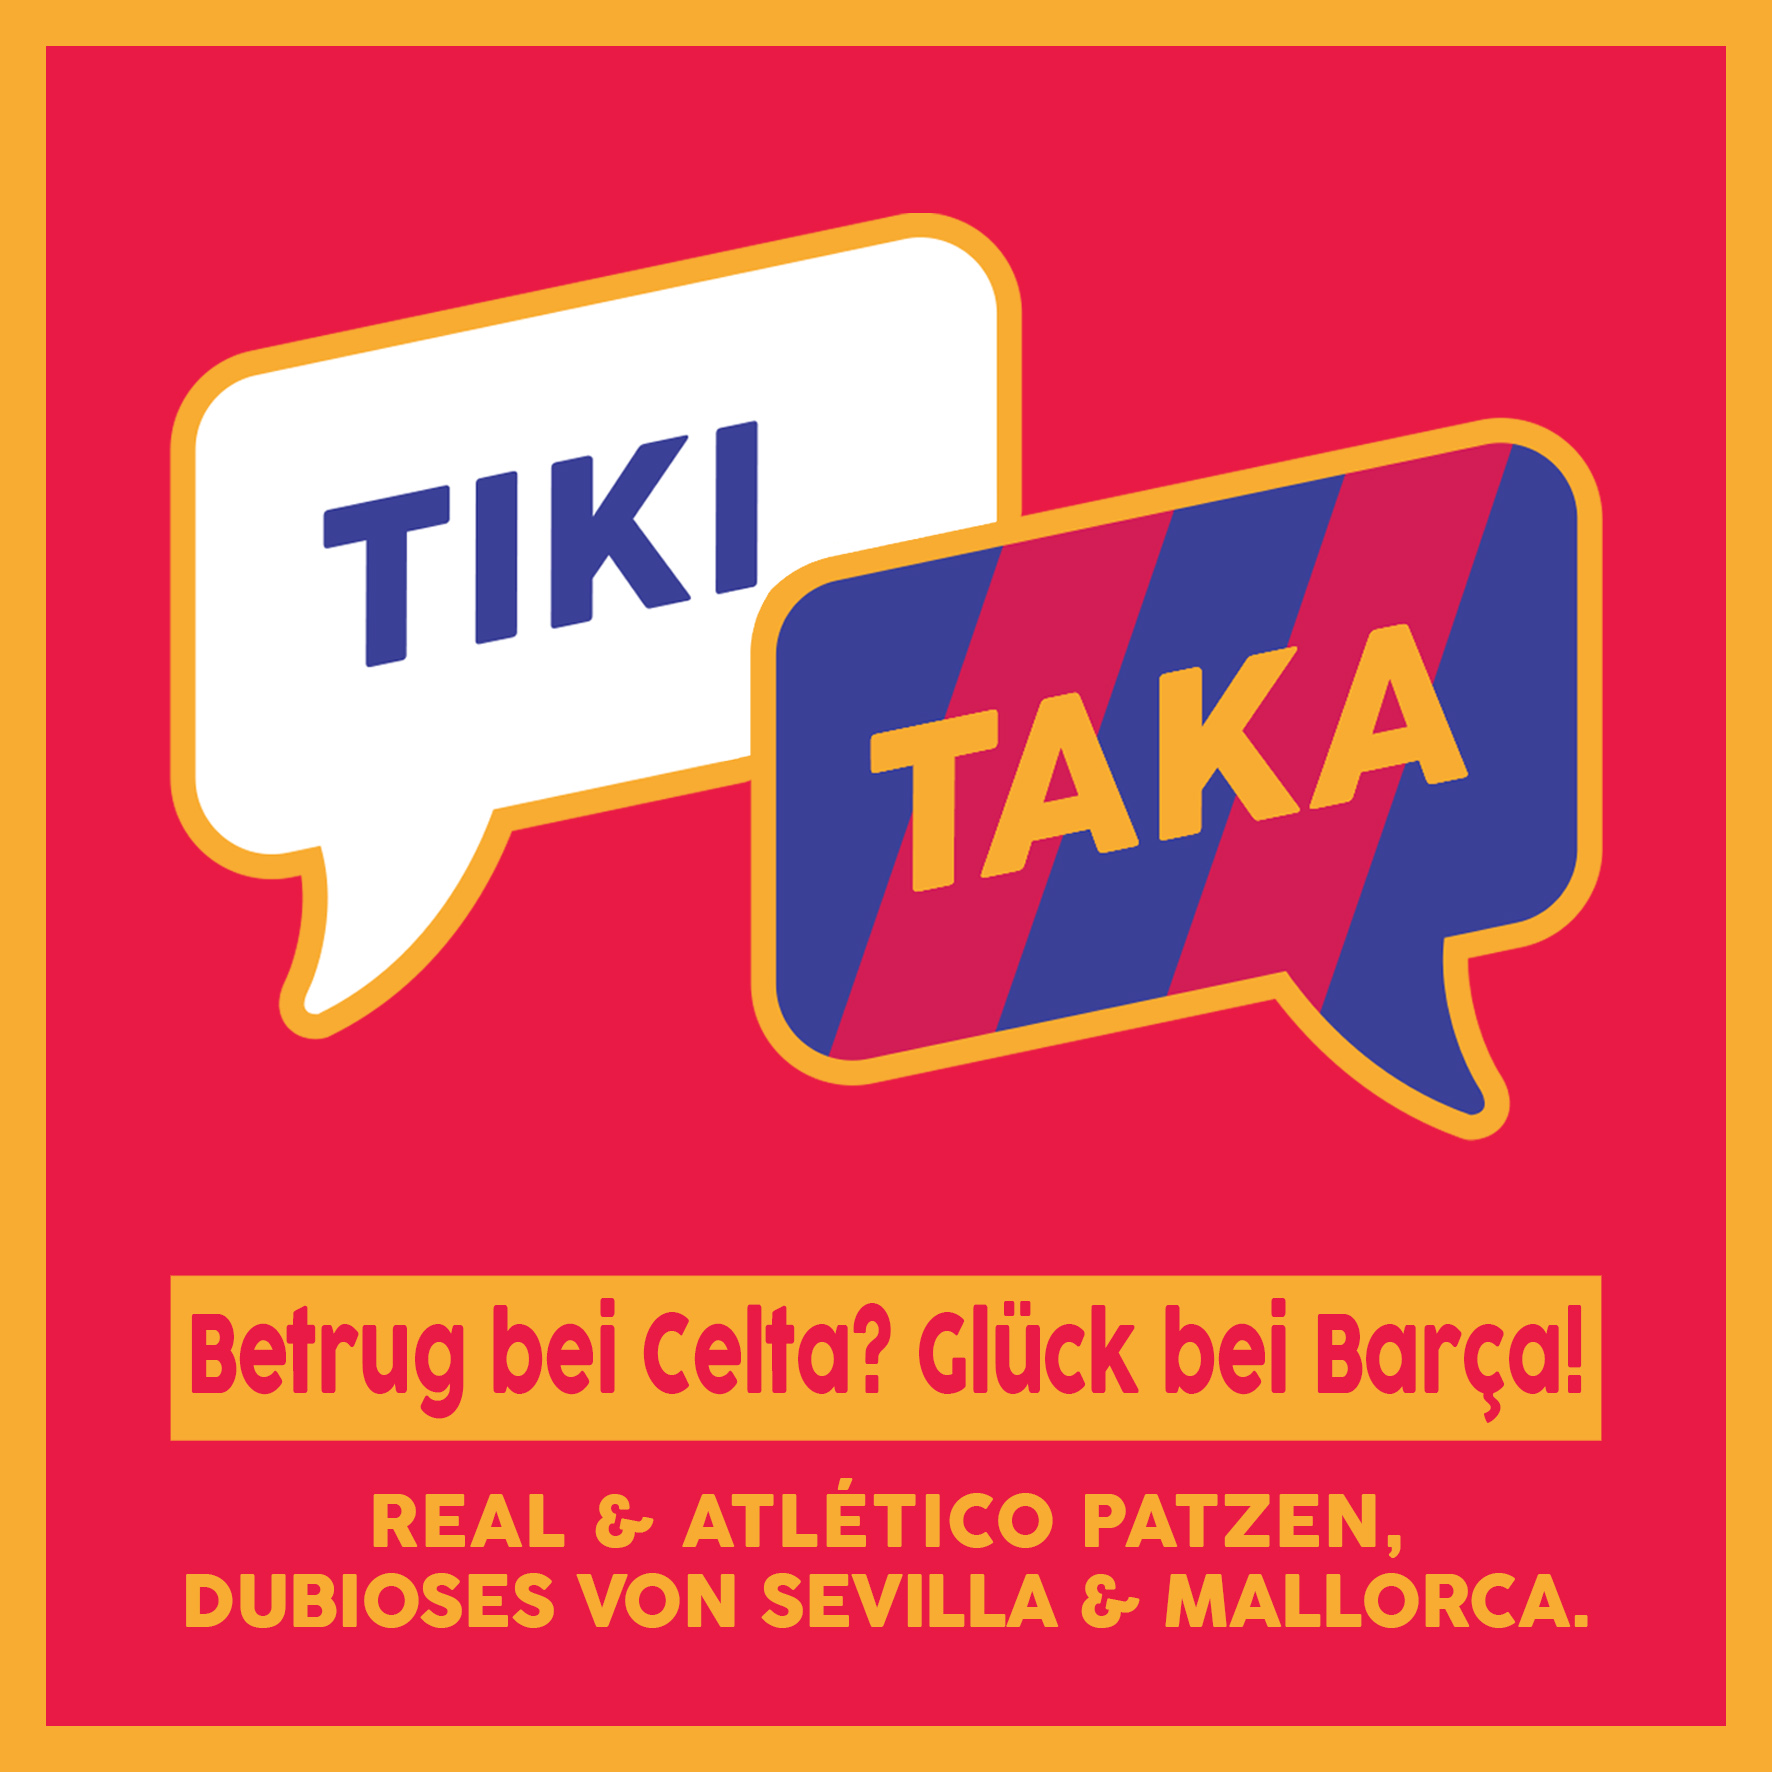 Aspas und Celta wittern Betrug – Barça hat Reals Glück (Folge 201)